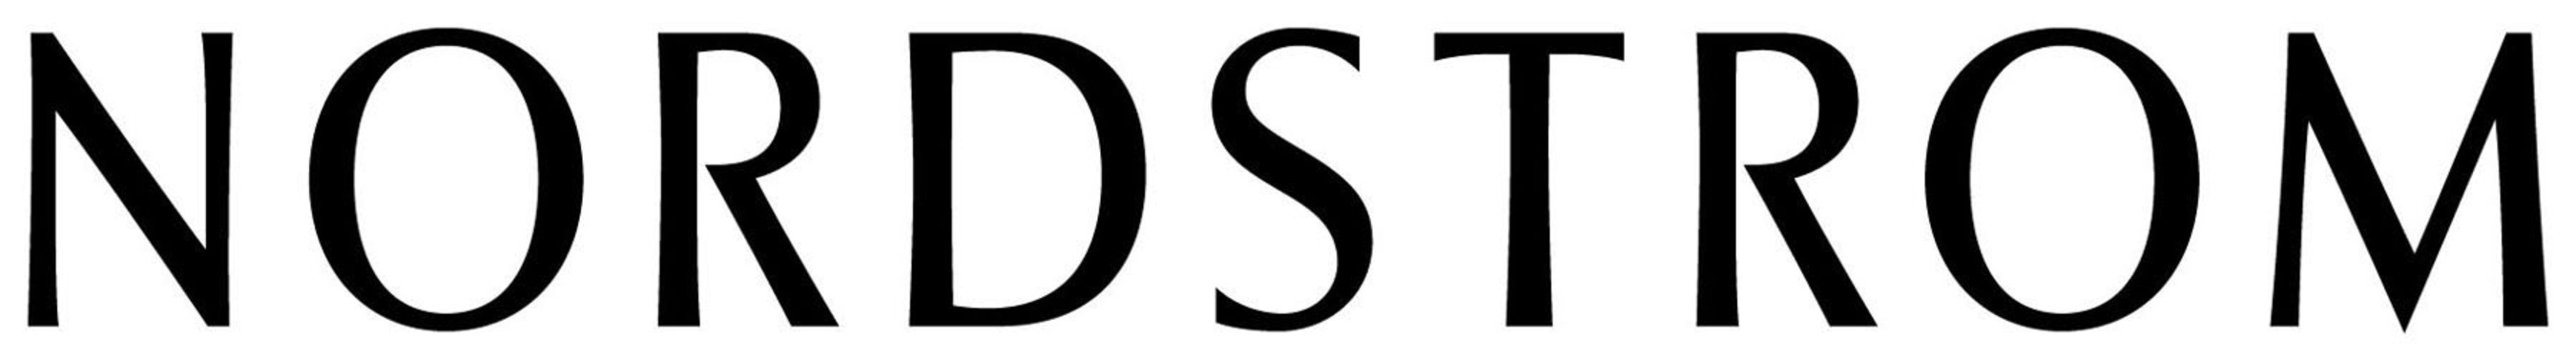 Nordstrom Incorporated logo. (PRNewsFoto) (PRNewsFoto/)